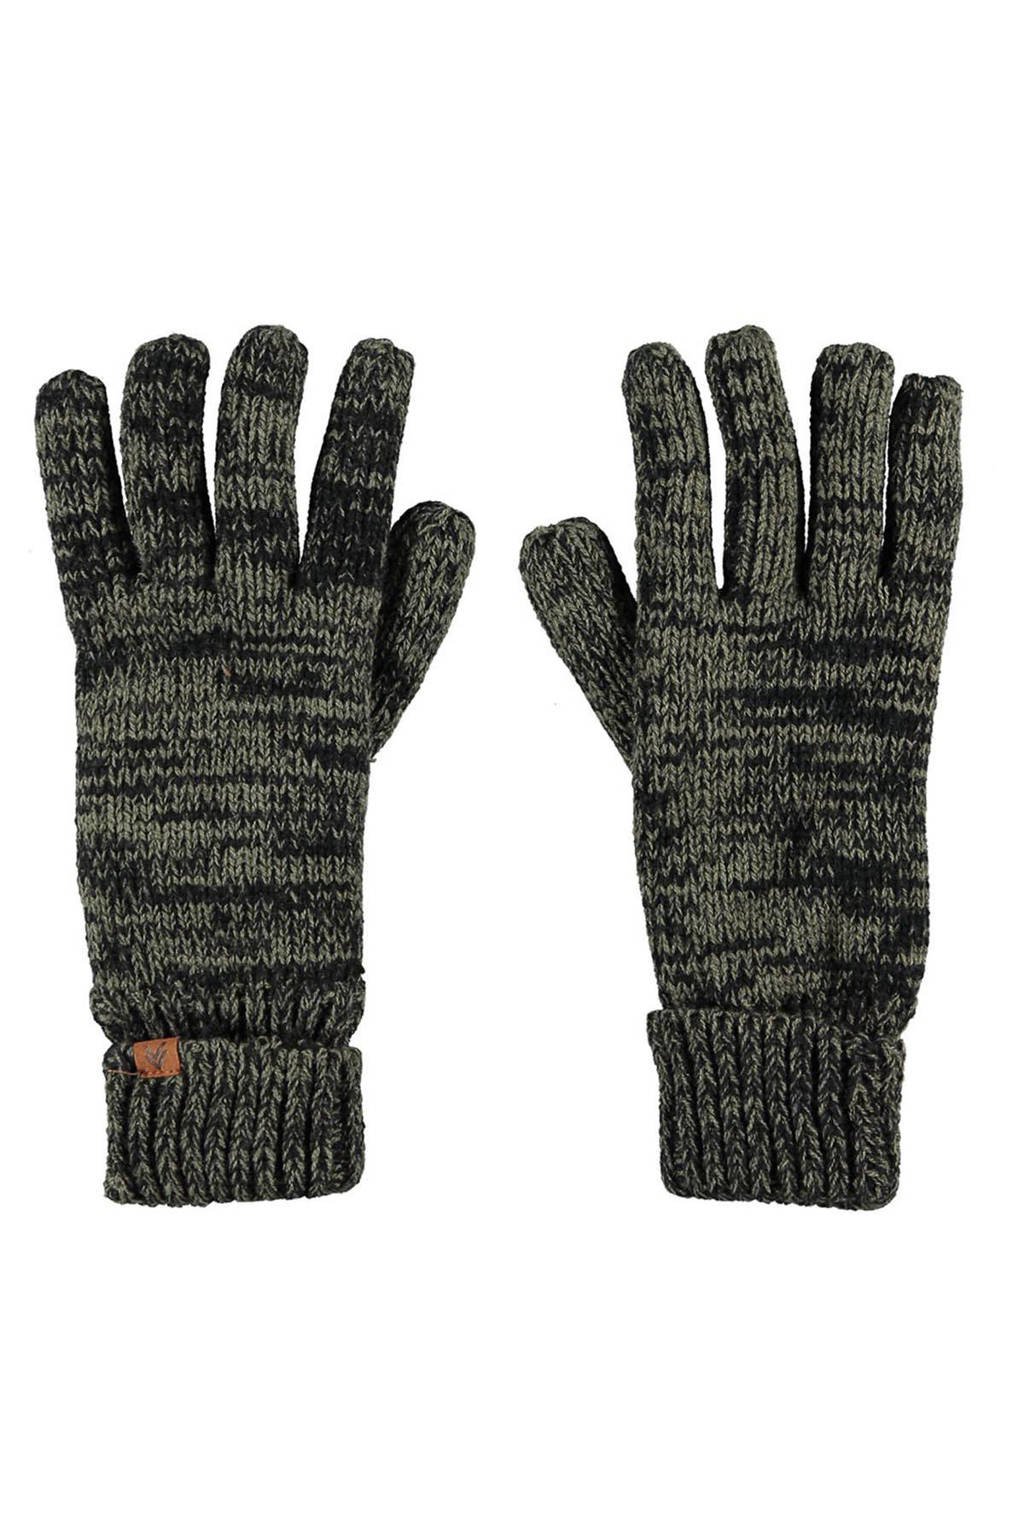 Sarlini handschoenen gemeleerd kaki, Kaki/zwart